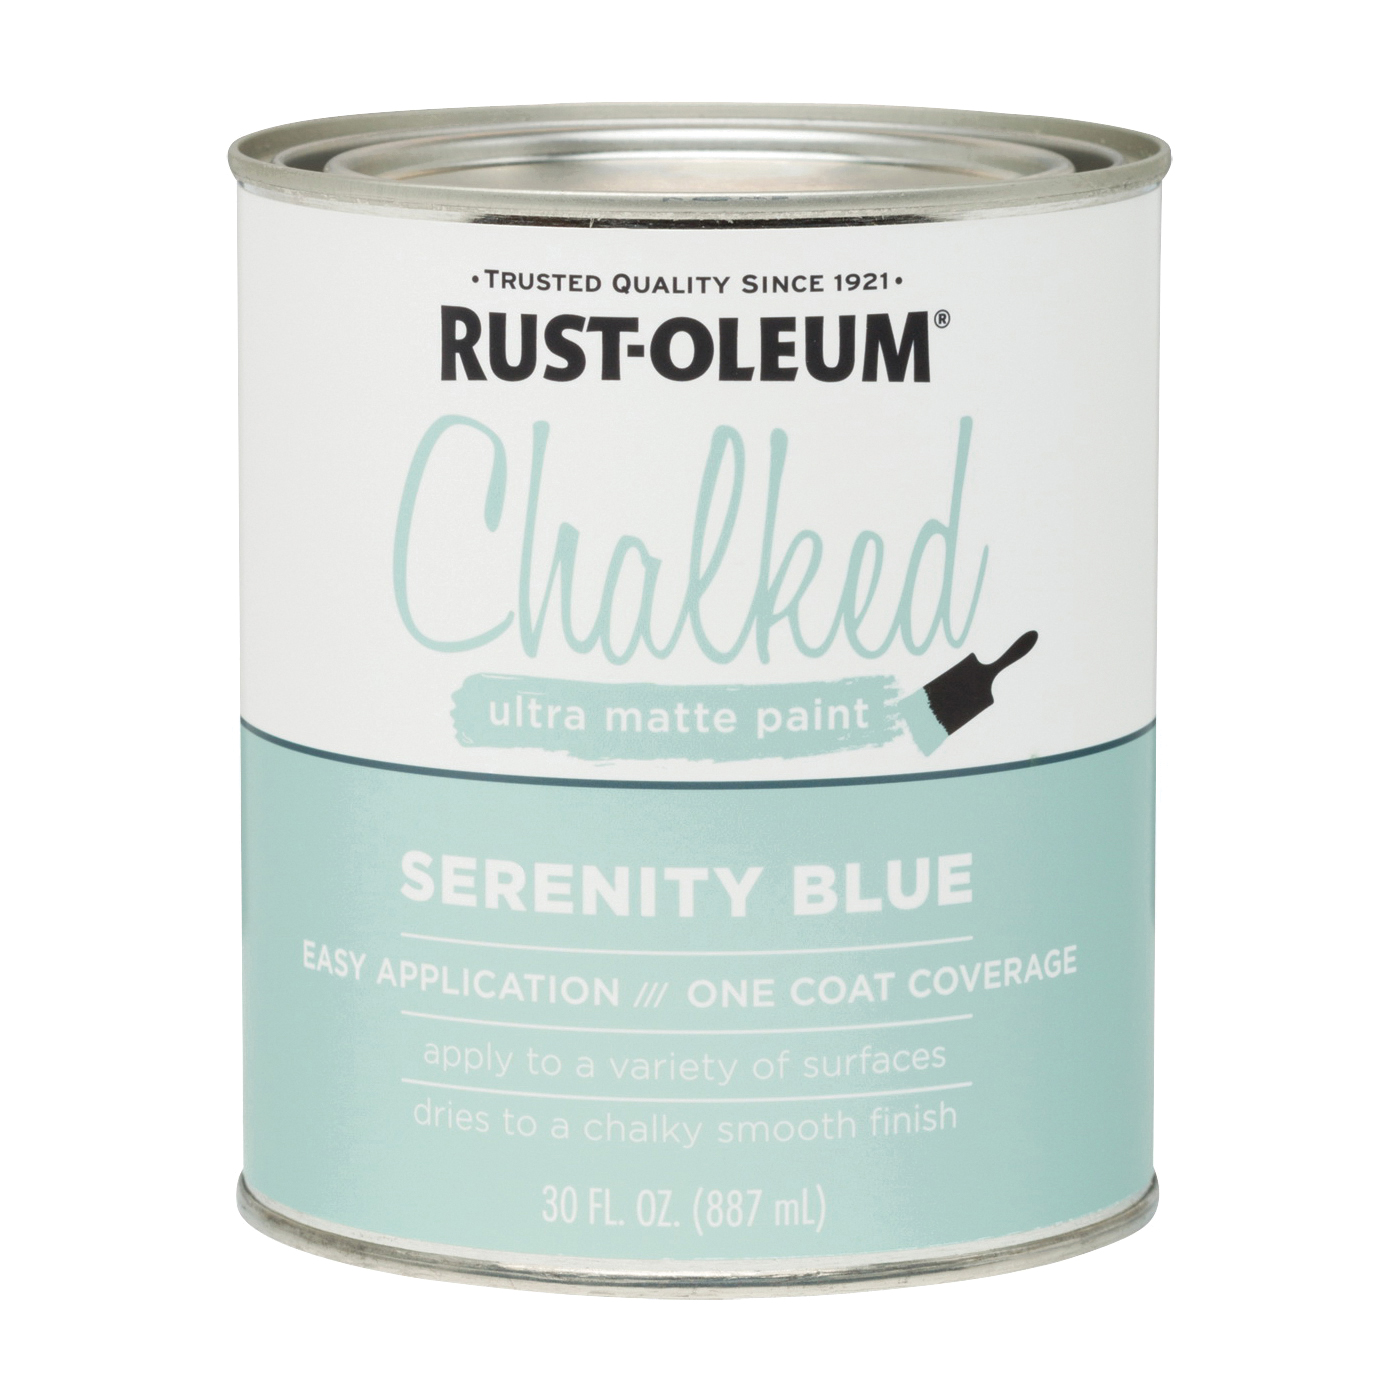 Chalked 285139 Chalked Paint, Ultra Matte, Serenity Blue, 30 oz, Quart